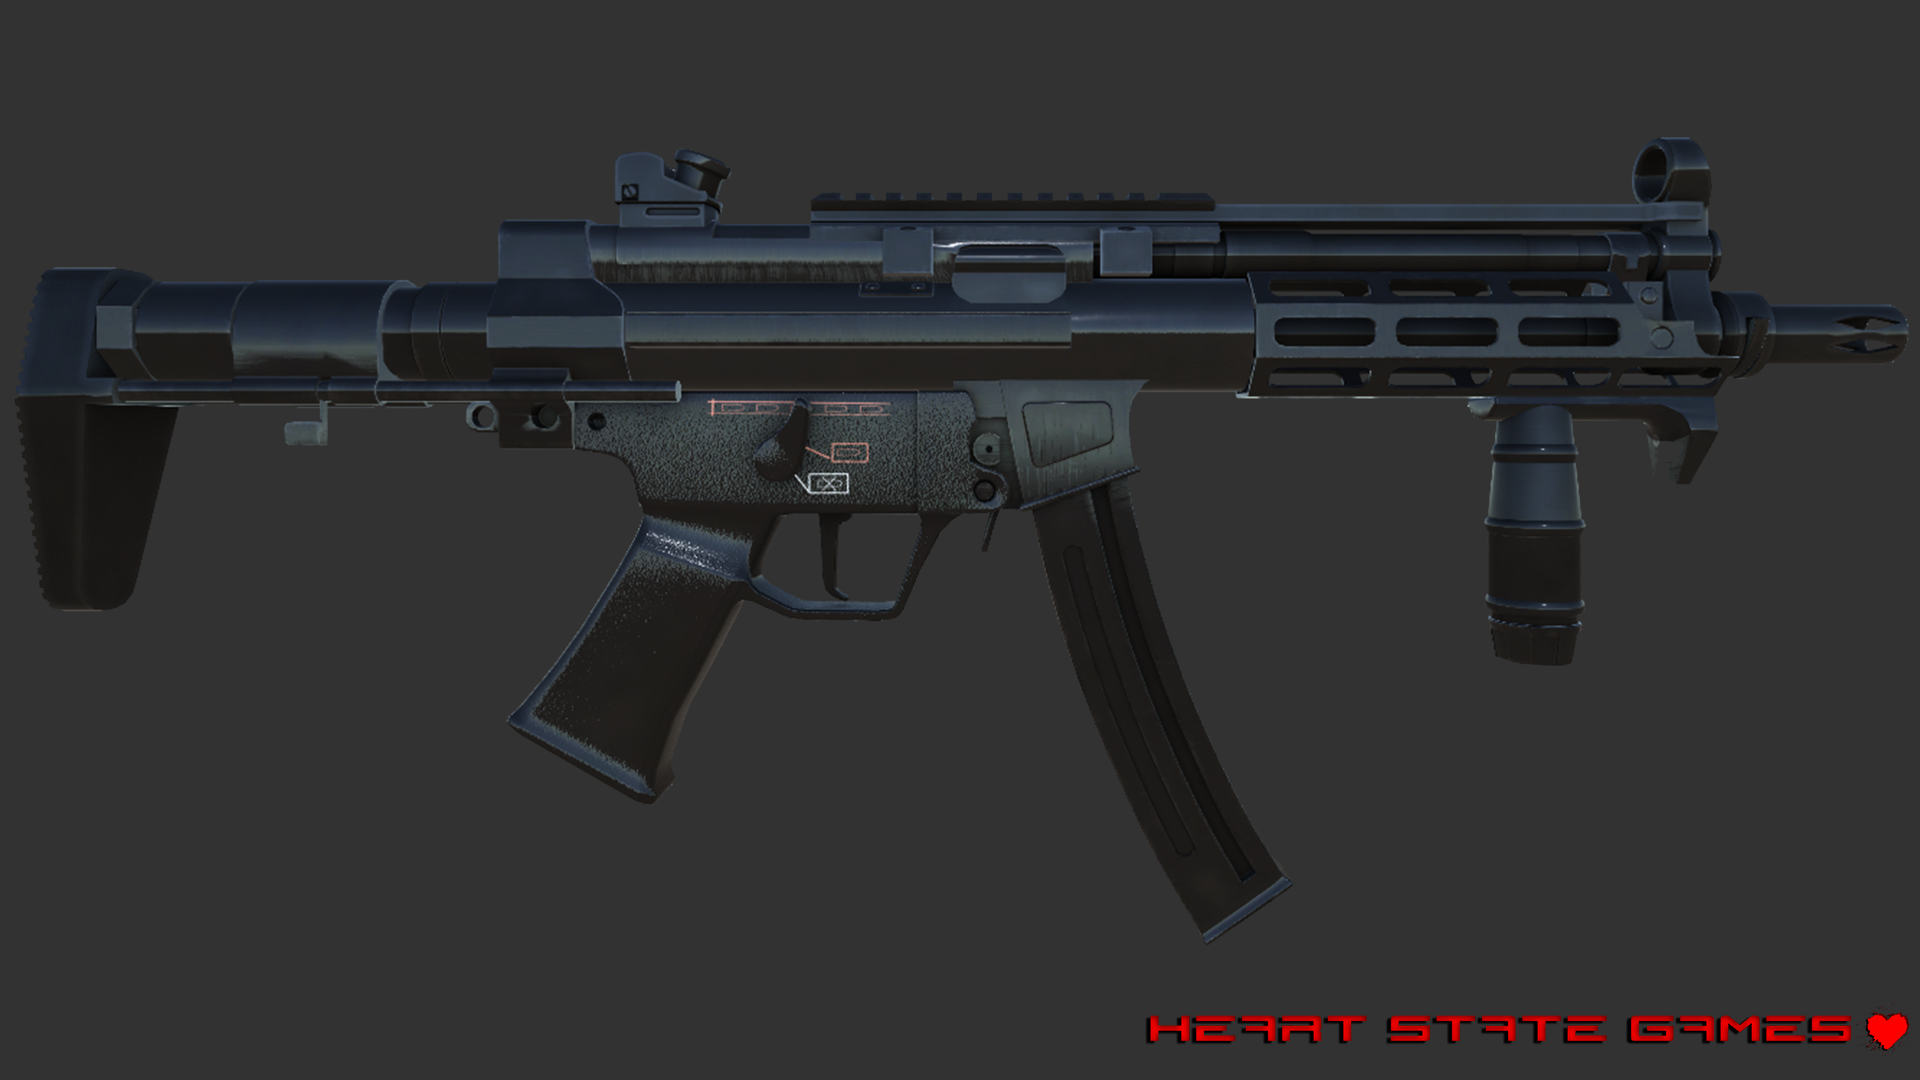 MP5 2